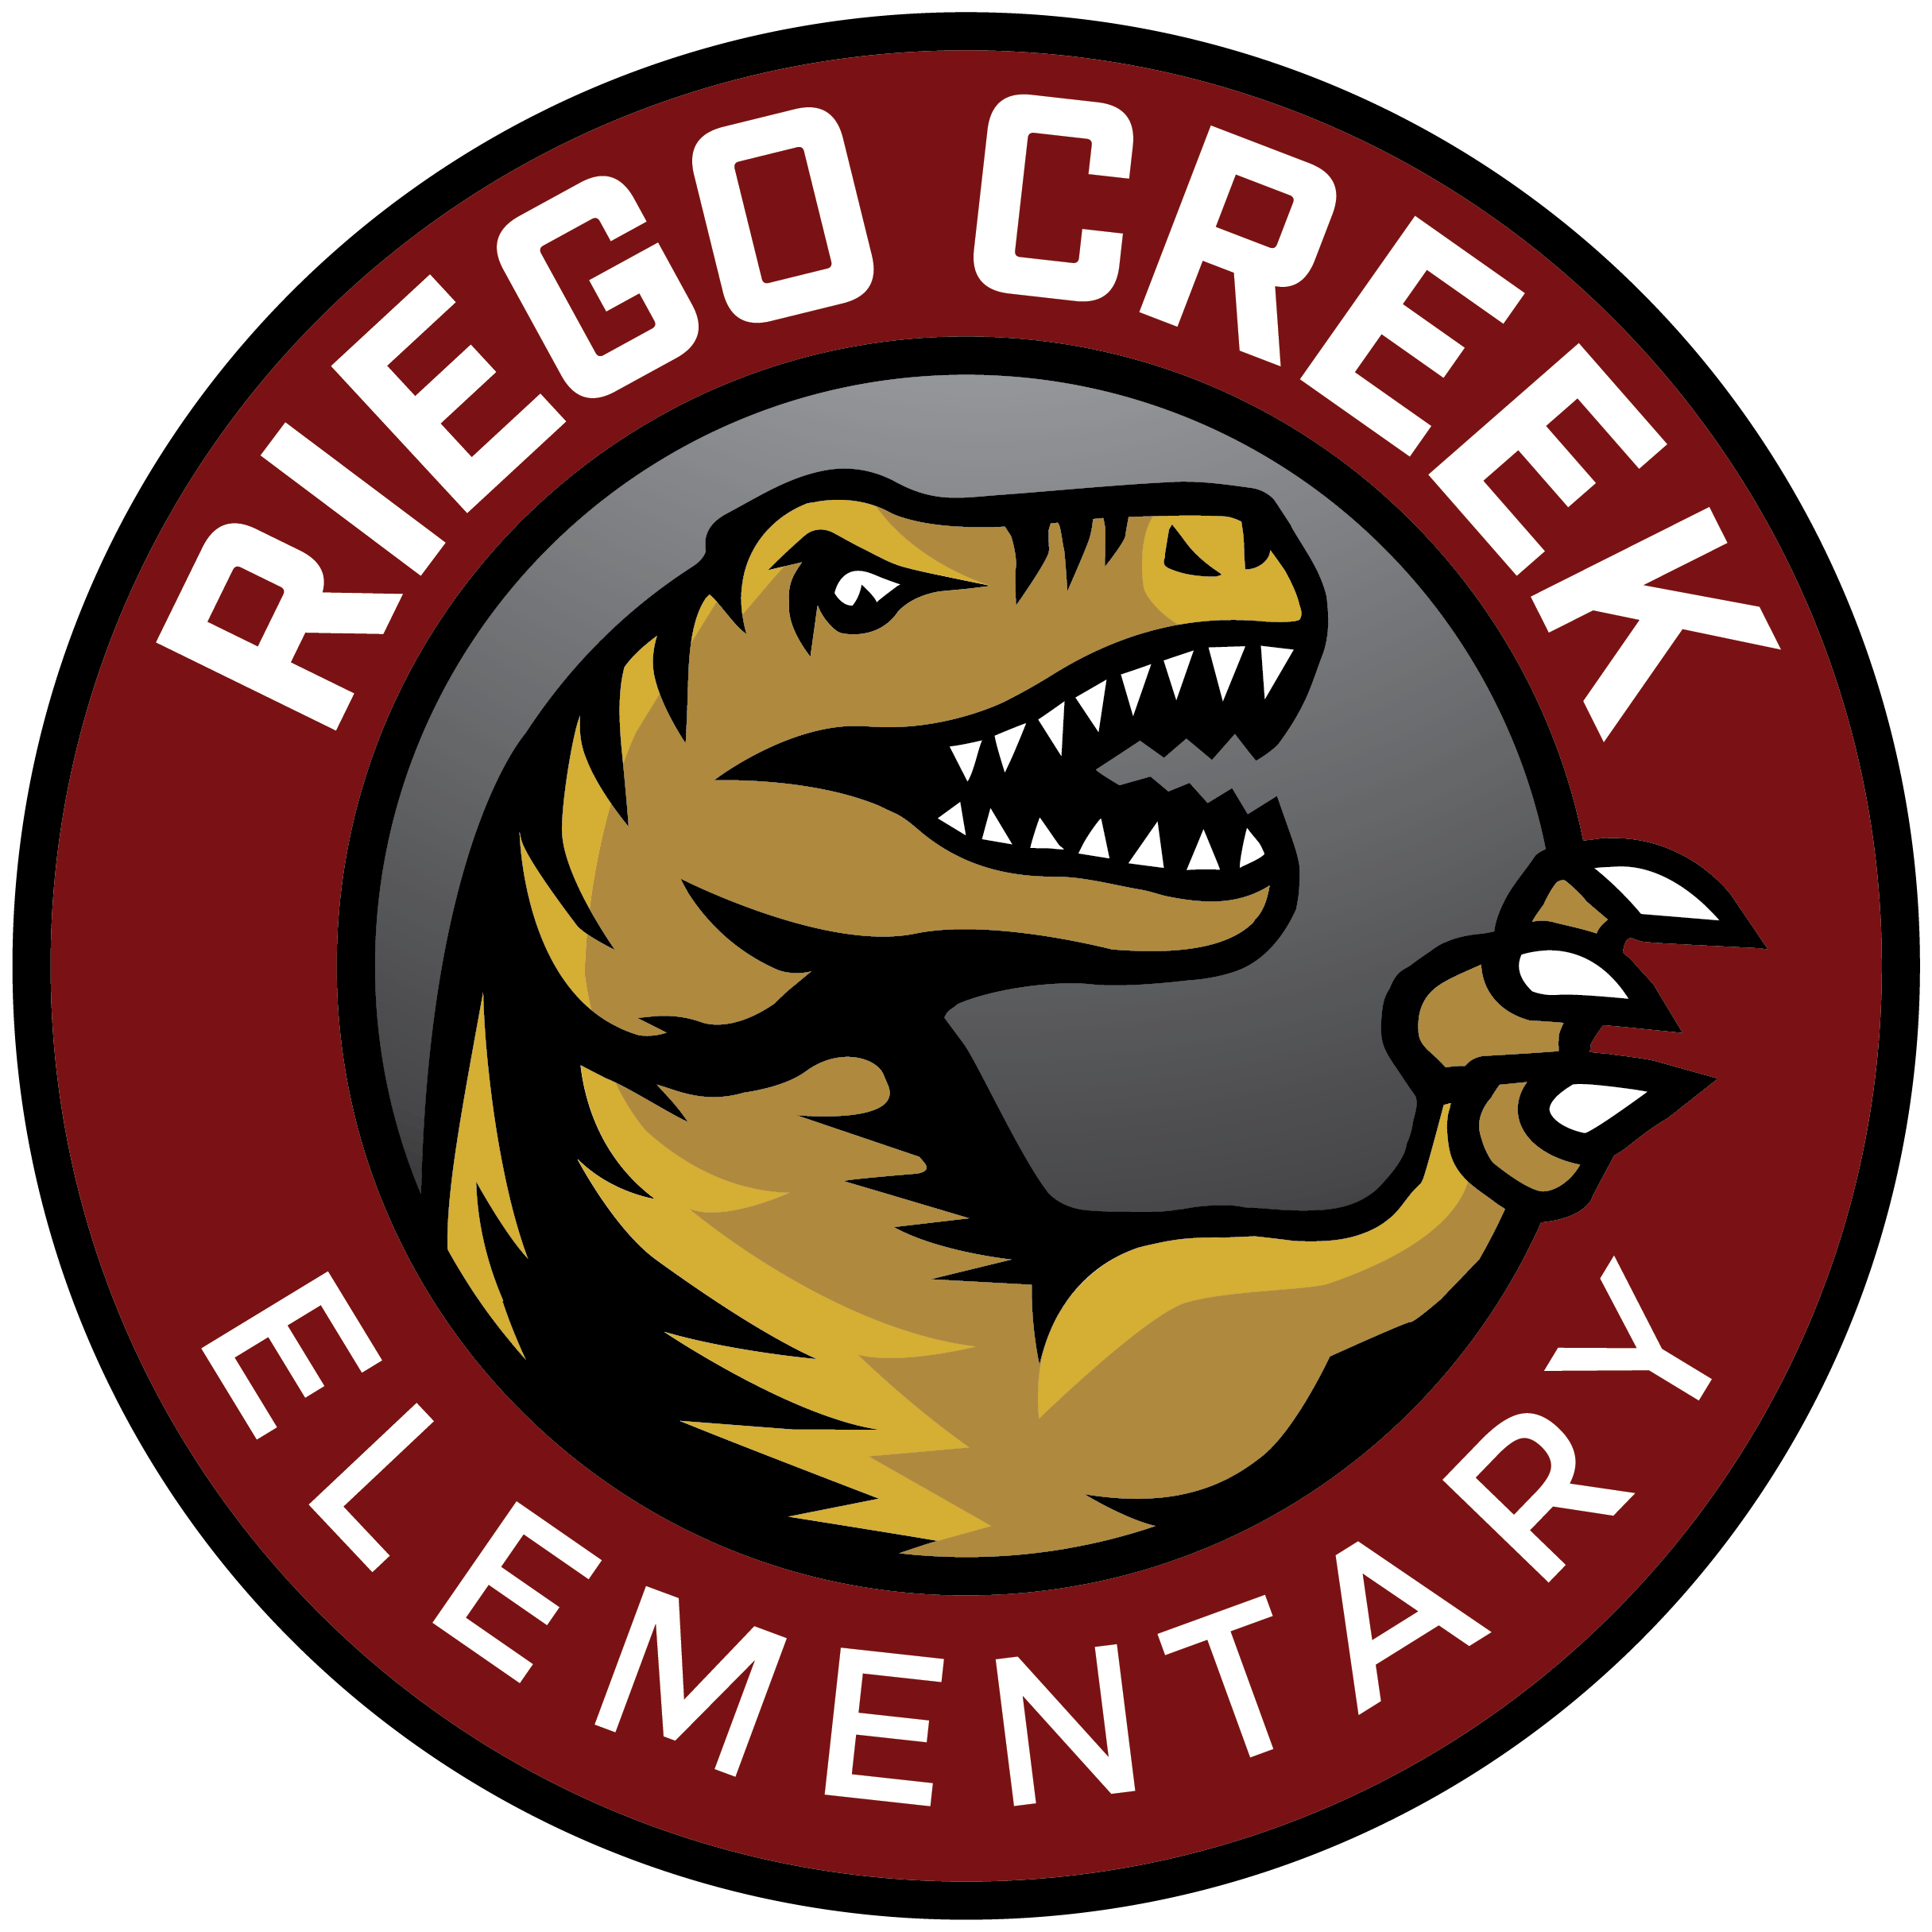 Riego Creek Elementary